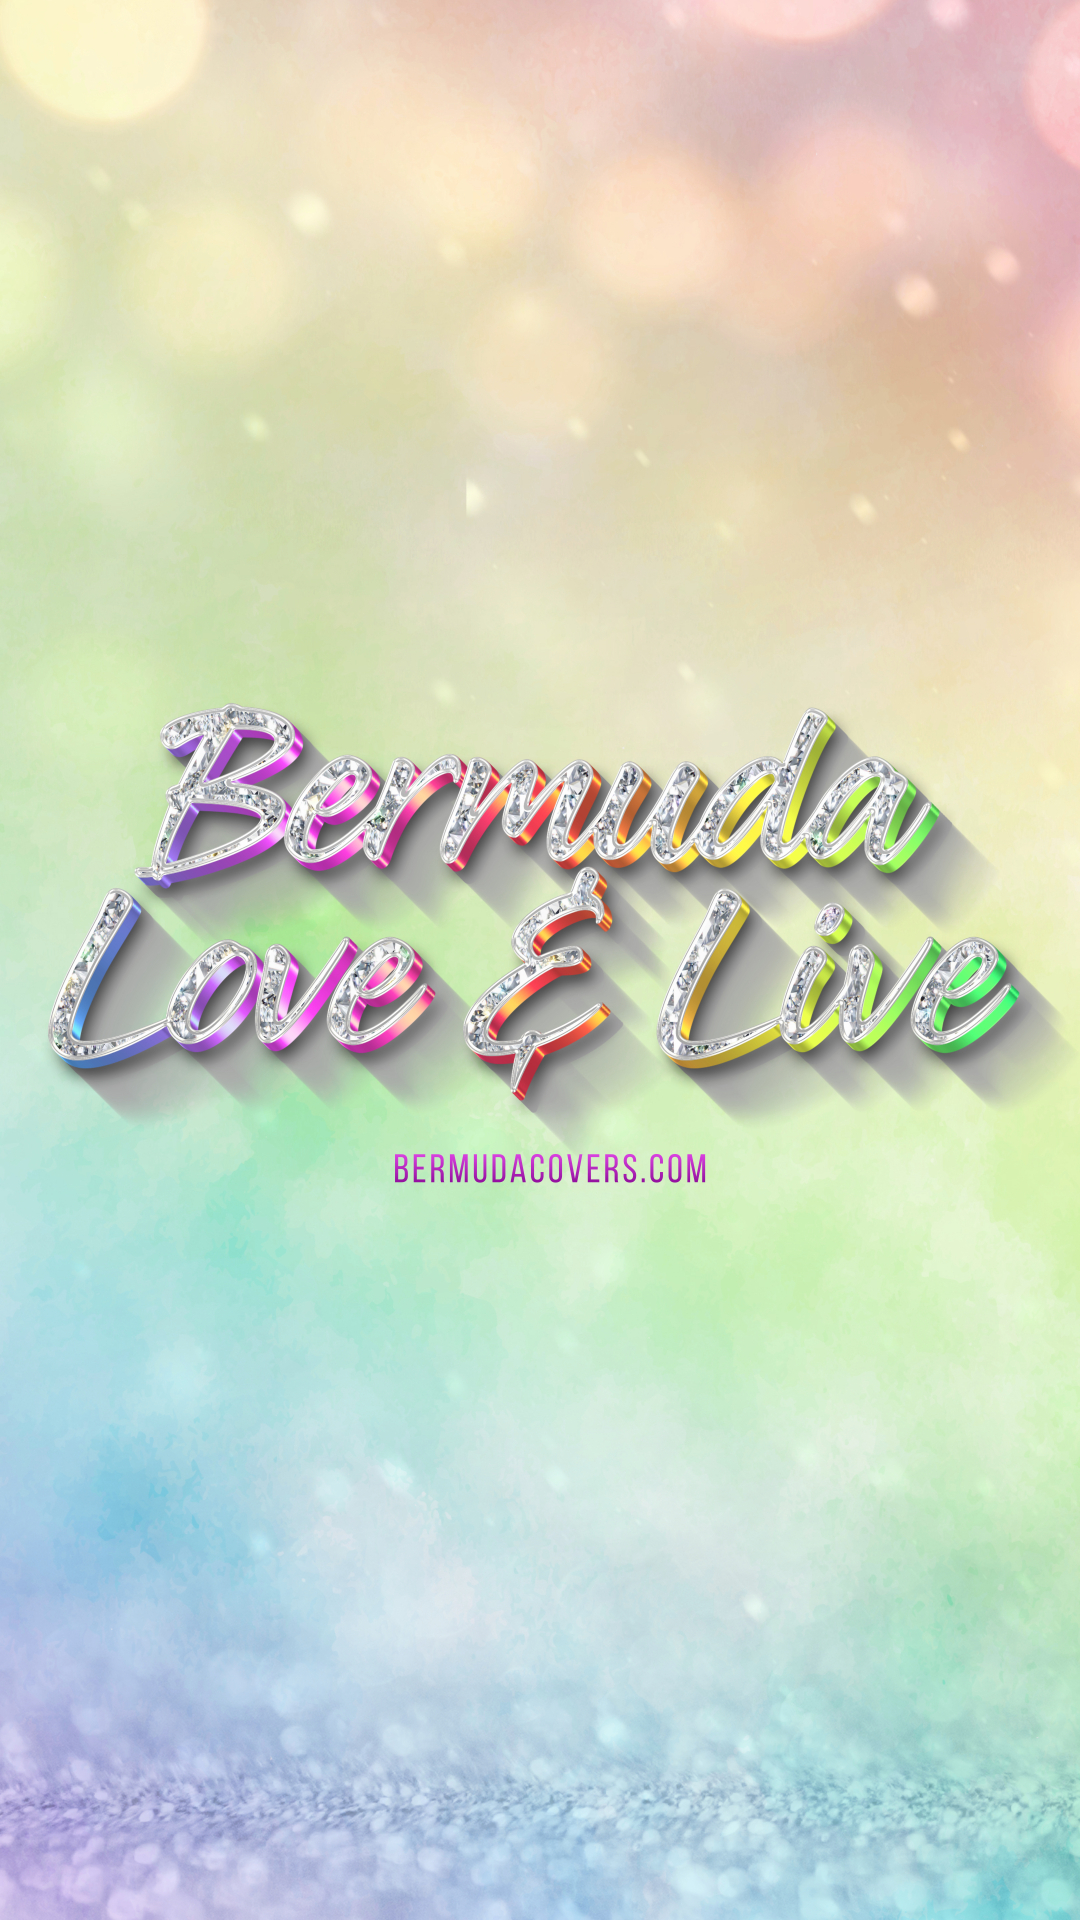 Pale Clouds Bermuda Love & Live LGBTQ rainbow graphic social media design image IG story whatsapp status 283892 (4)